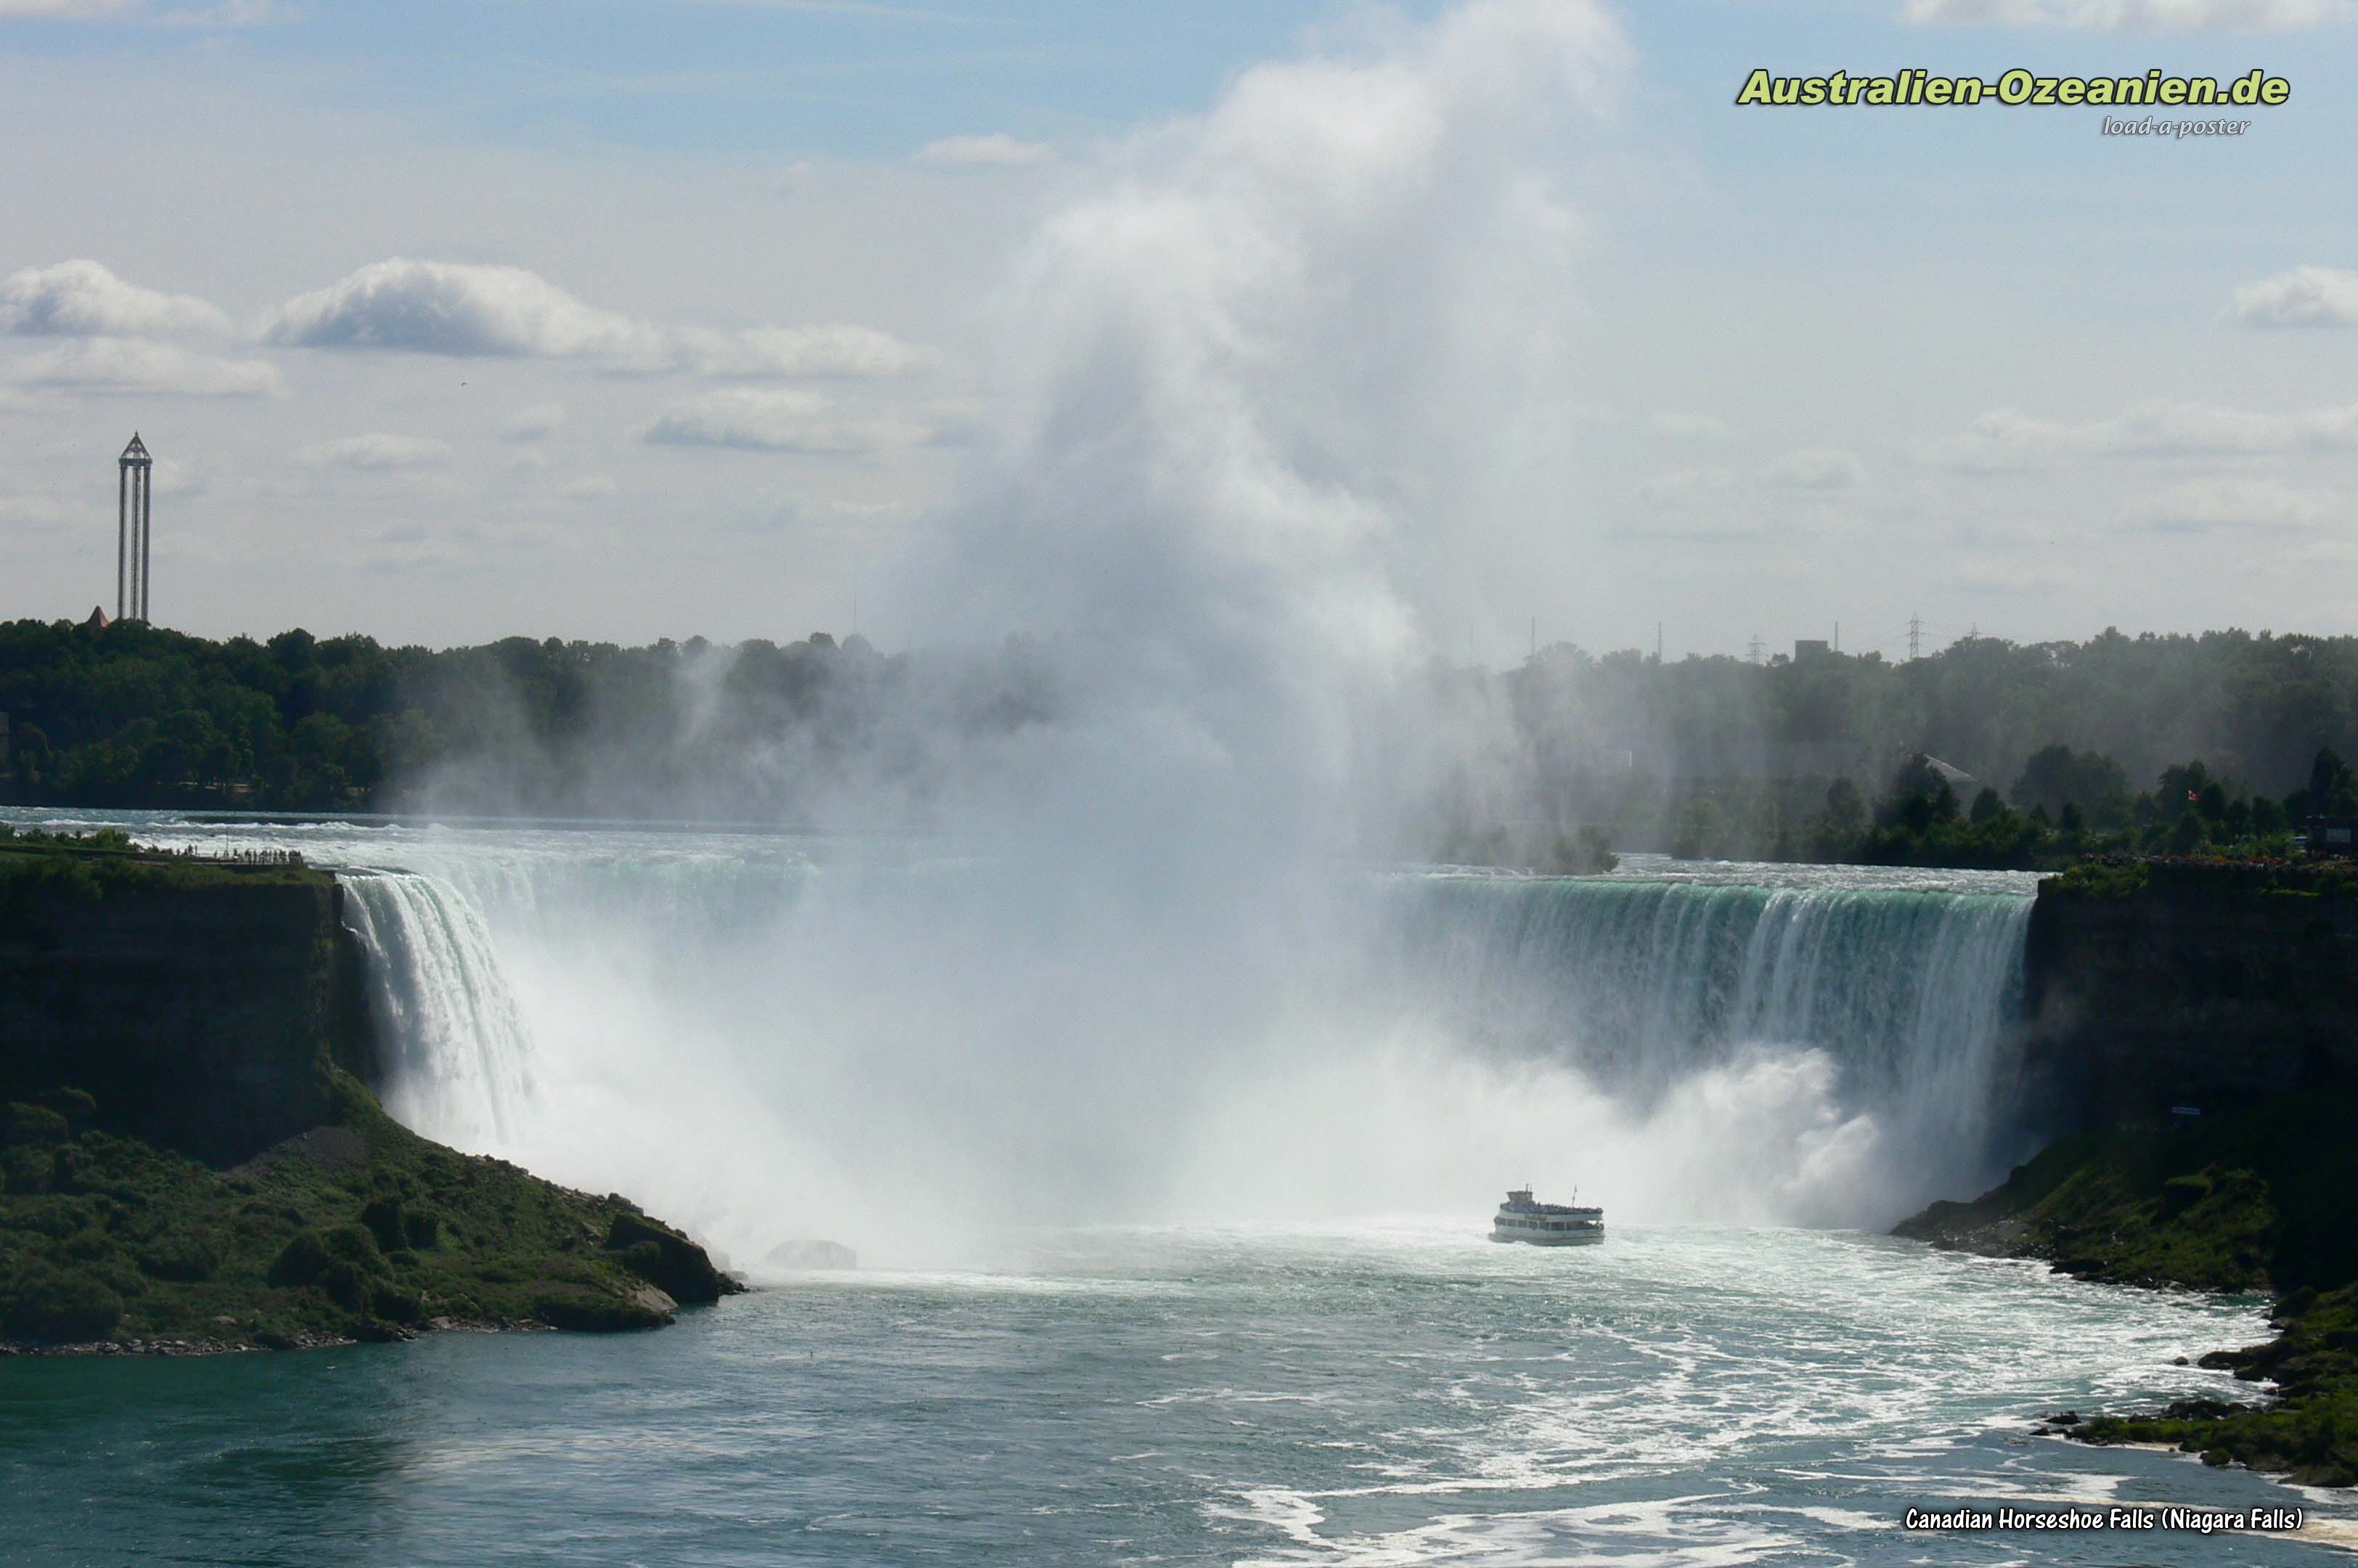 Canadian Horseshoe Falls - Niagarafälle